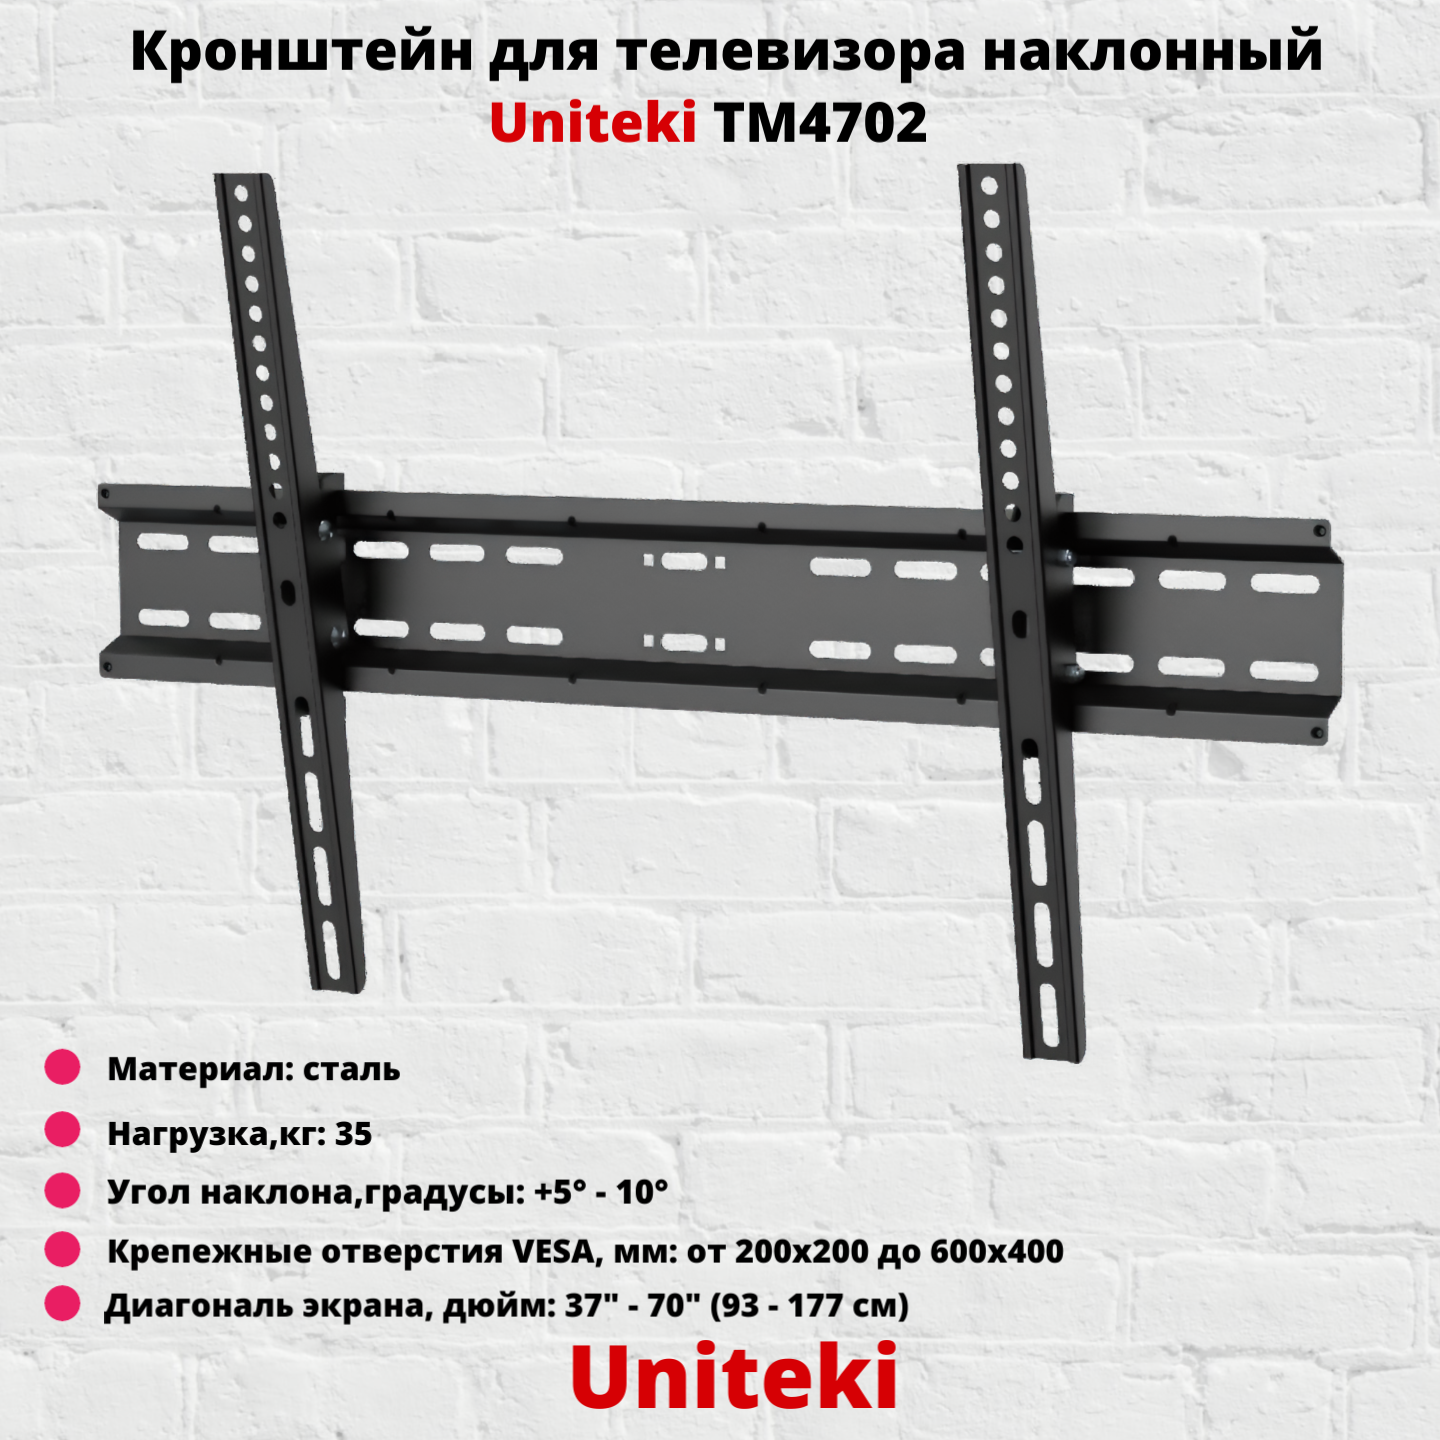 Наклонный кронштейн для телевизора Uniteki TM4702B 37-70 черный